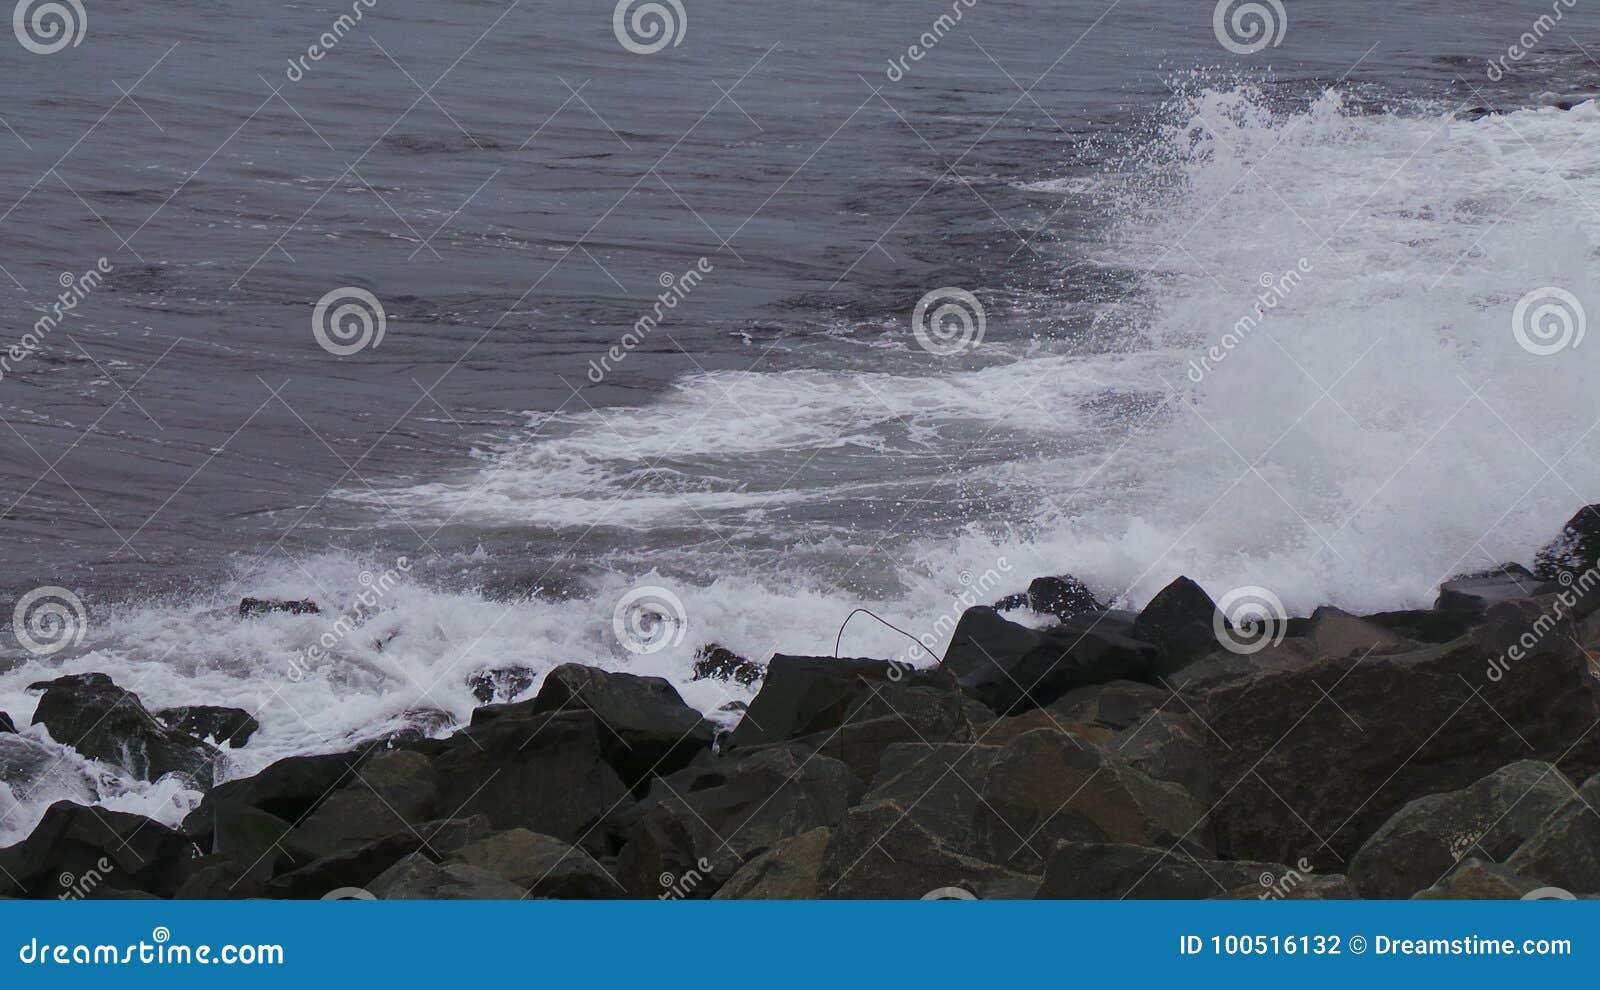 sea thrashing the rocks in hartlepool